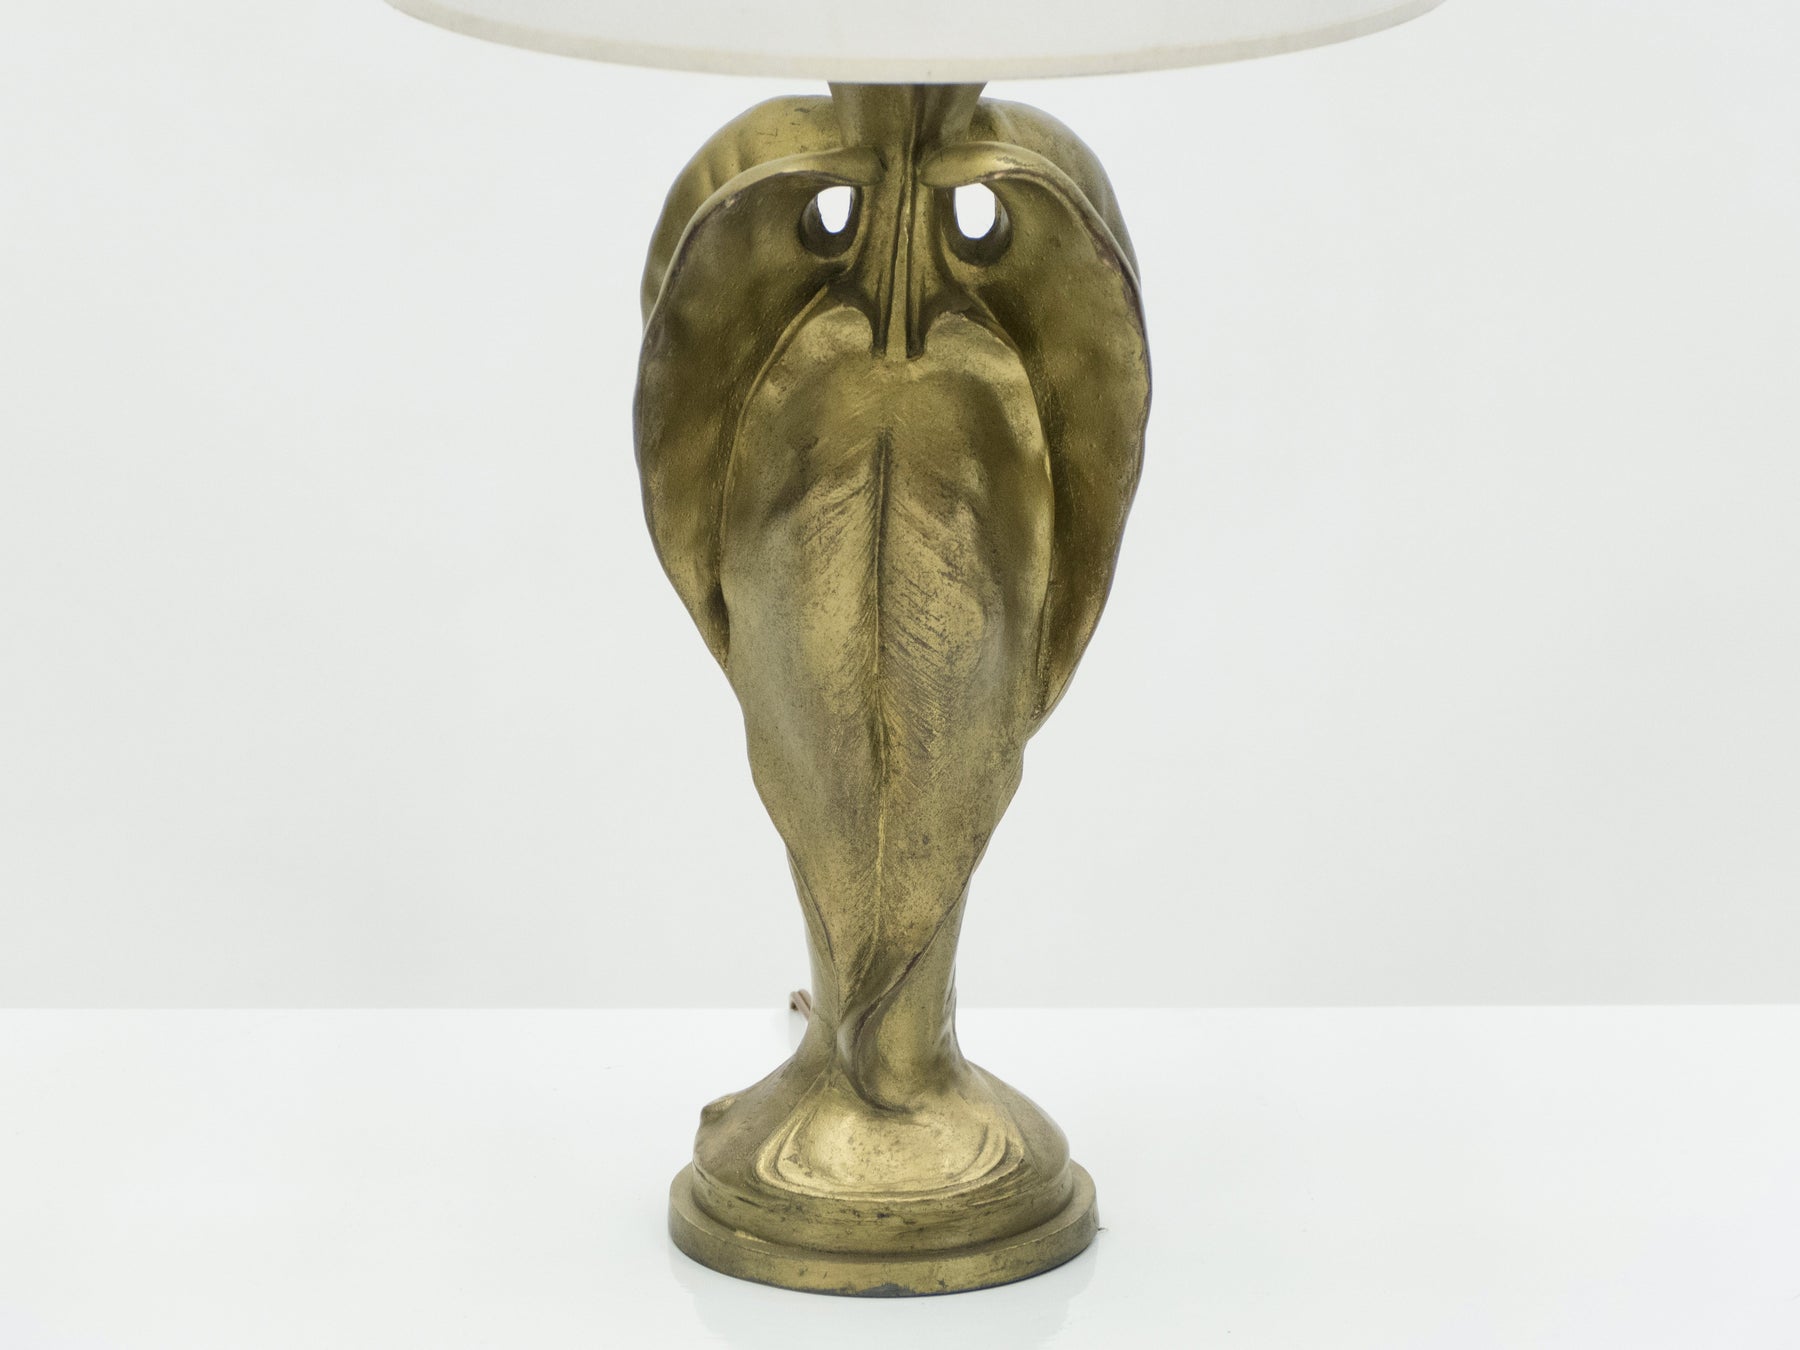 French bronze Art deco brass lamp 1920s